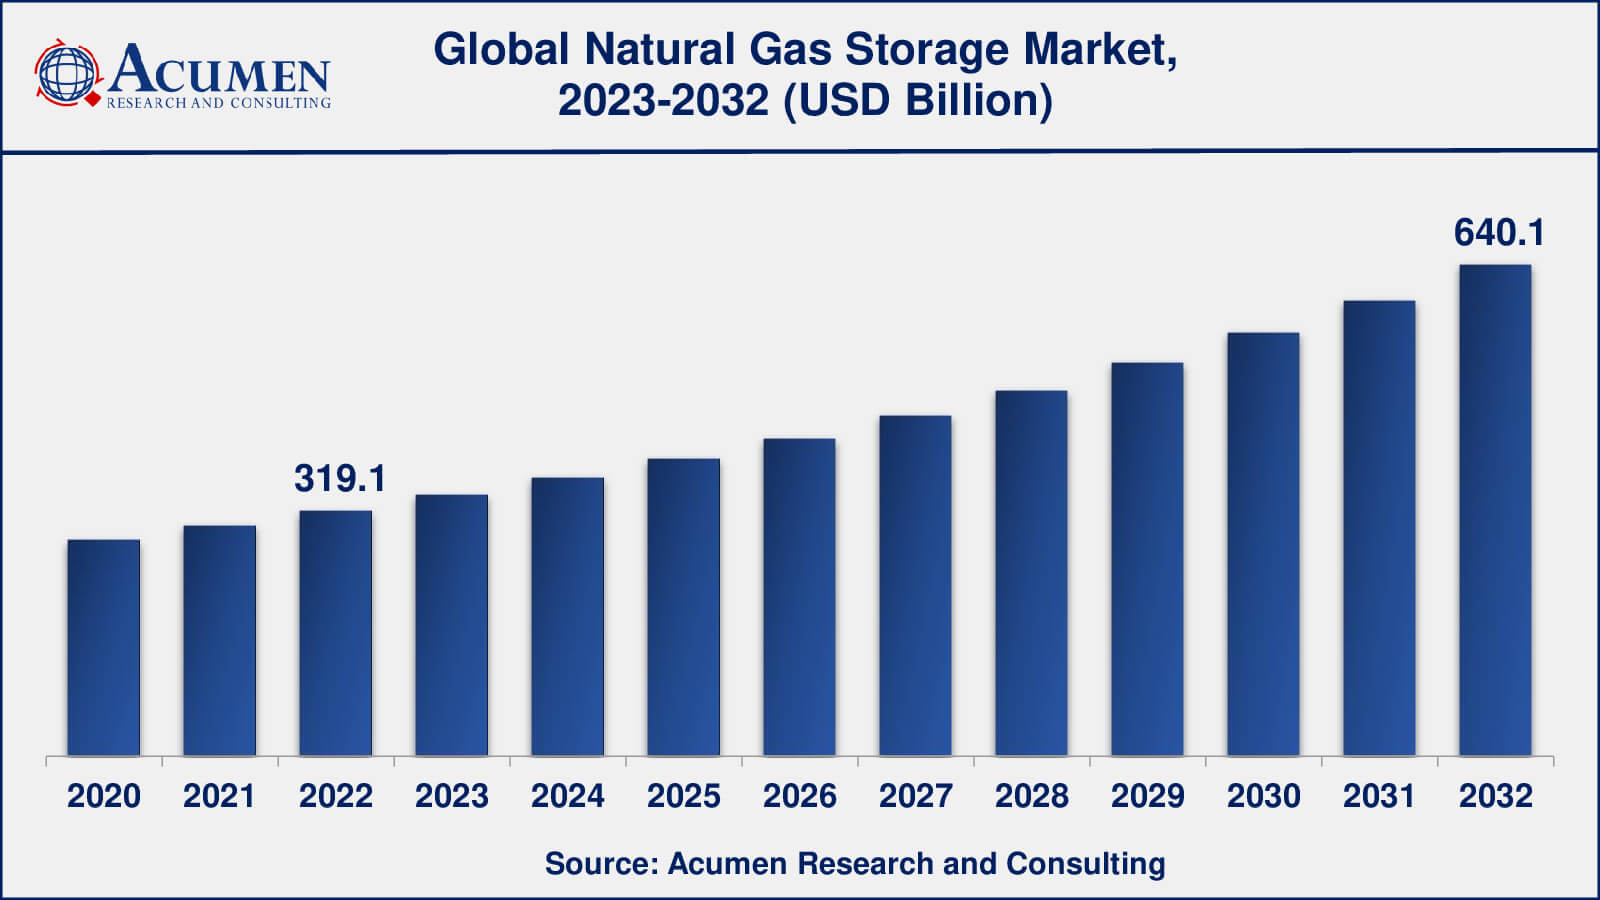 Global Natural Gas Storage Market Dynamics